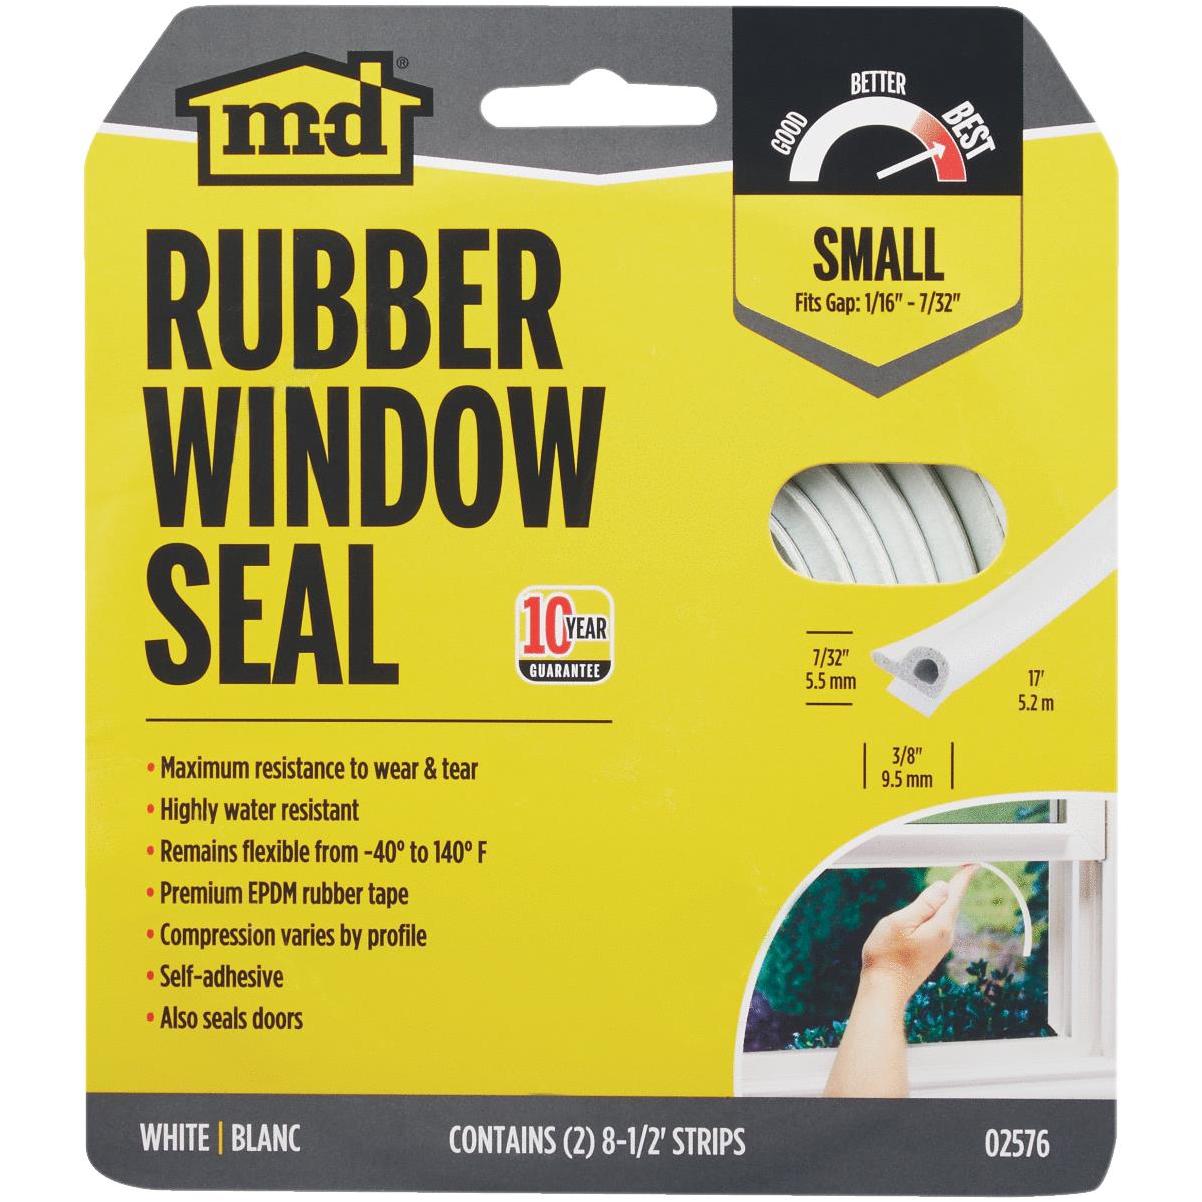 Flex Seal 14 oz Spray Rubber Sealant - White